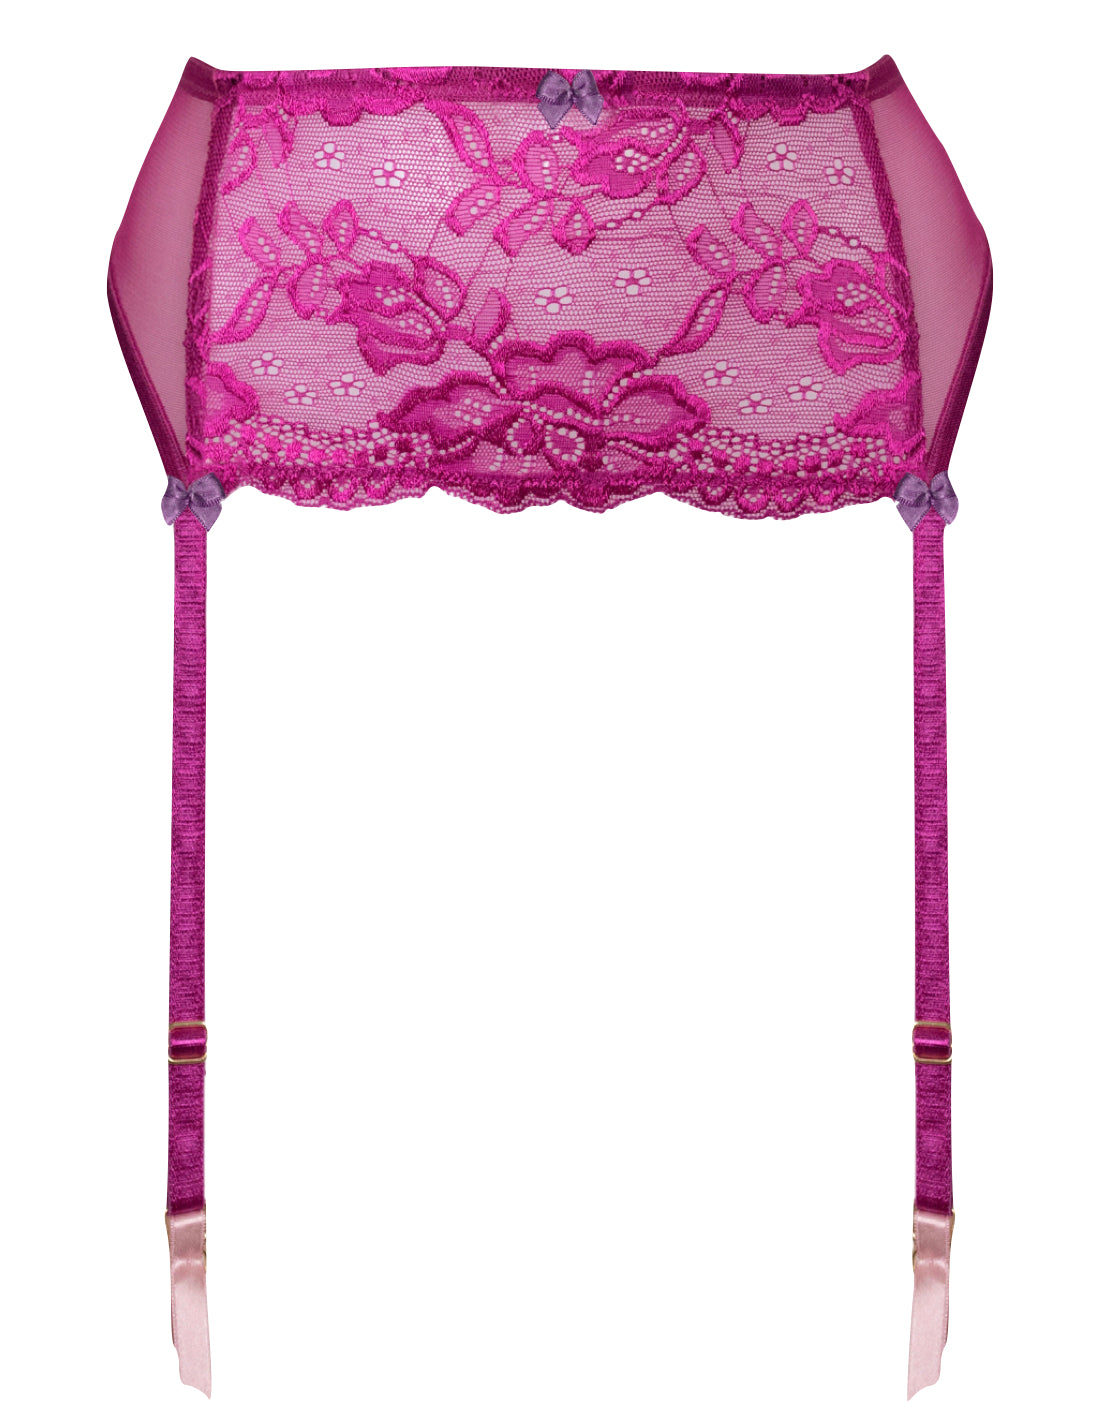 MIMI HOLLIDAY Fabulous Neon Pink Lace Padded Demi Bra Size UK 34C - EUR 75C  BNWT 5291211333420 on eBid Canada